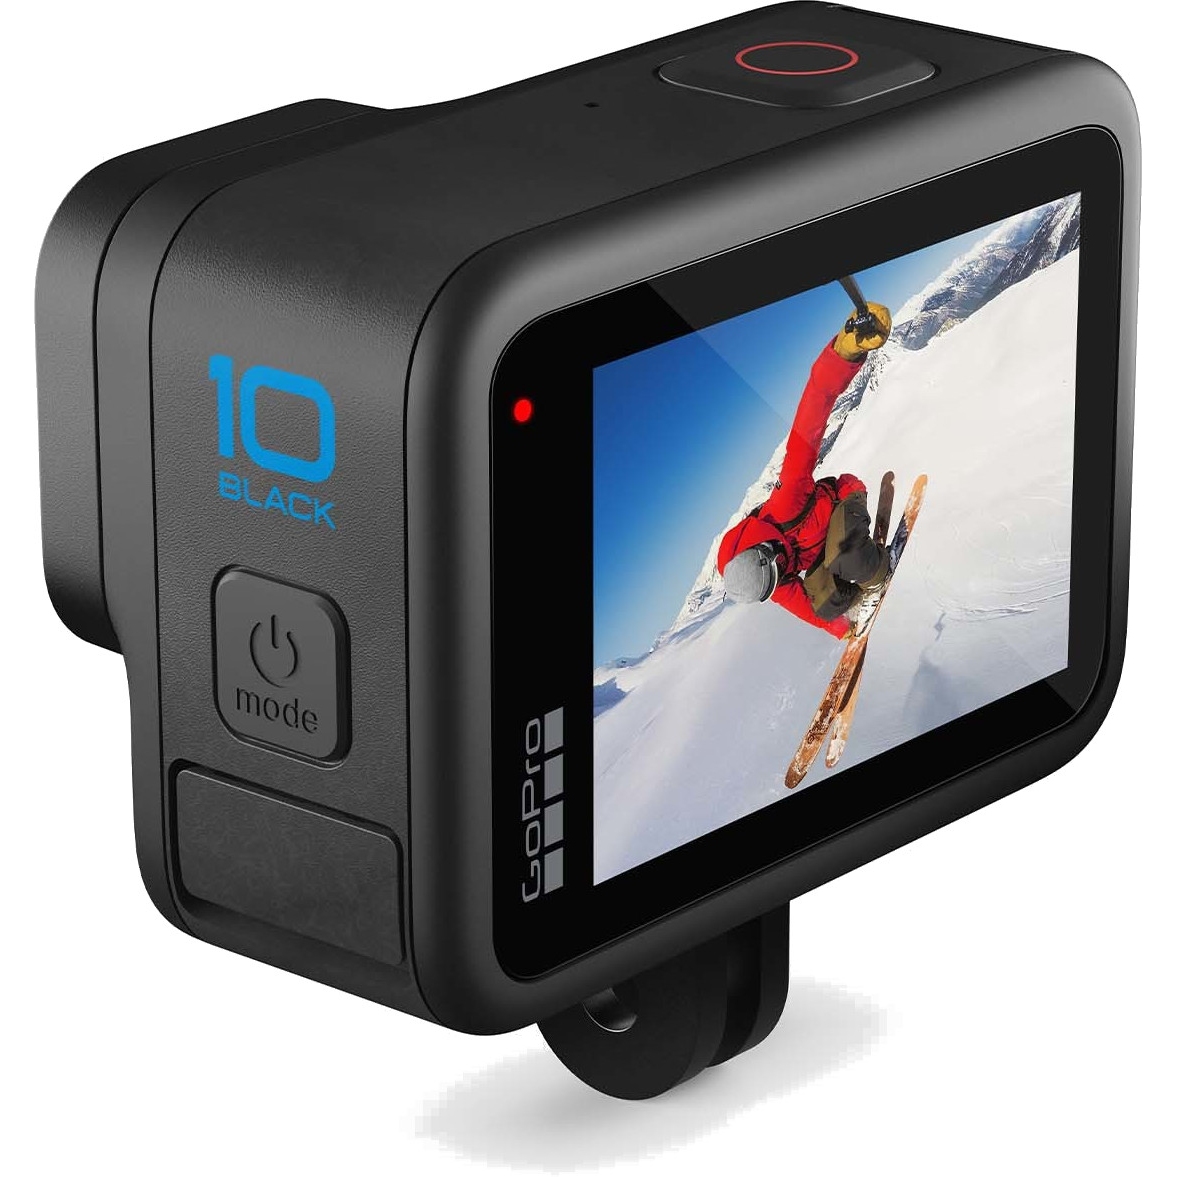 GoPro HERO 10 Black Action Camera HERO10 original kit accessories go pro 10  5.3K Screen 23MP GP2 Waterproof Video Sports Cameras